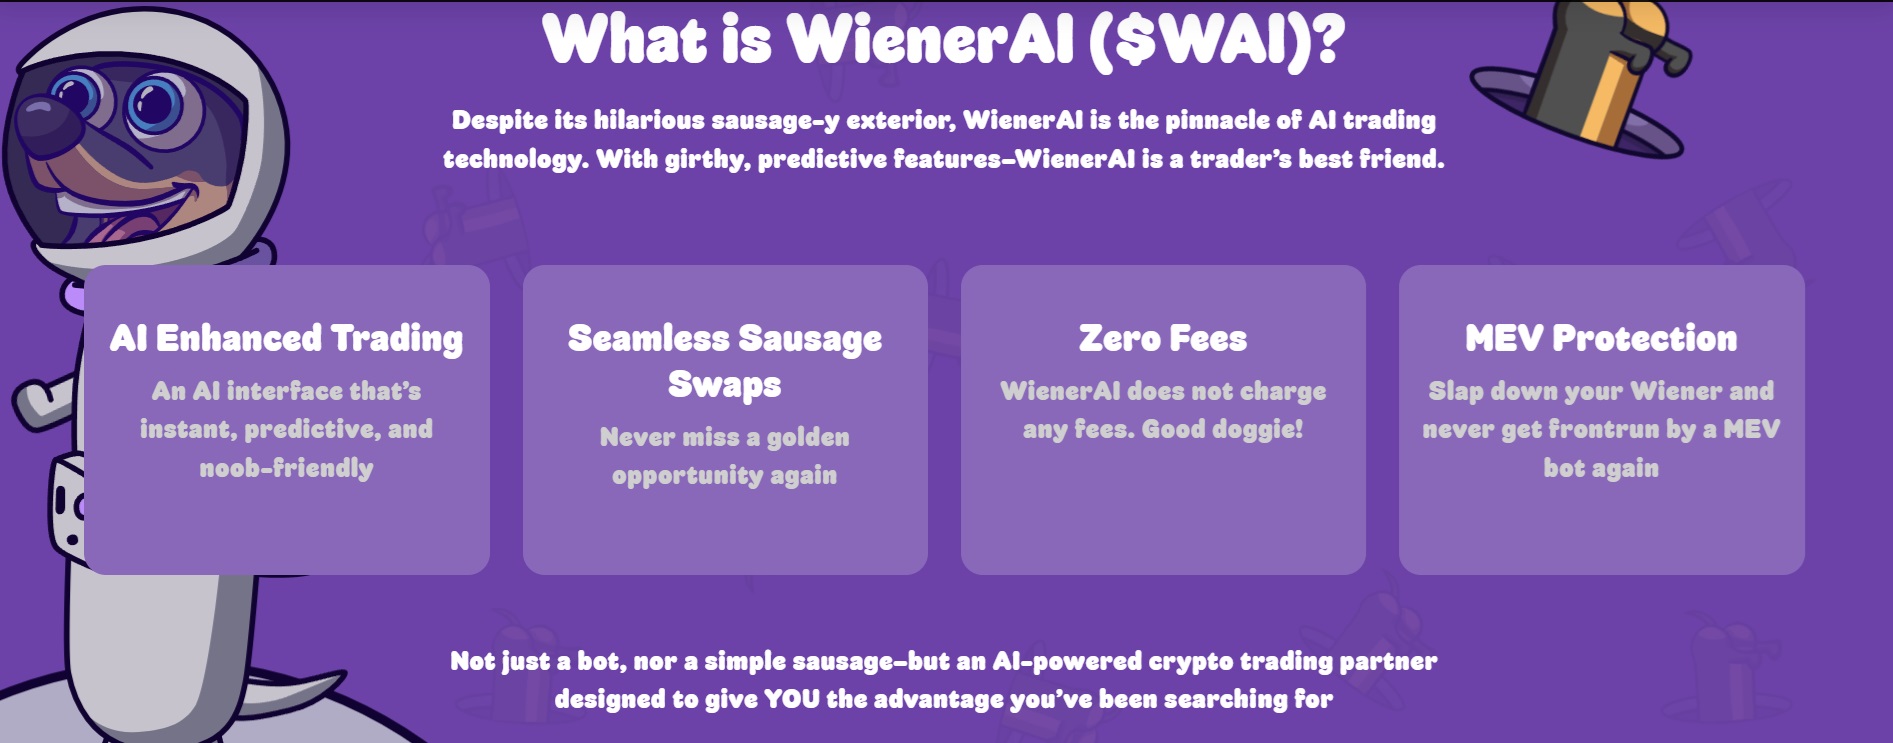 WienerAI Features